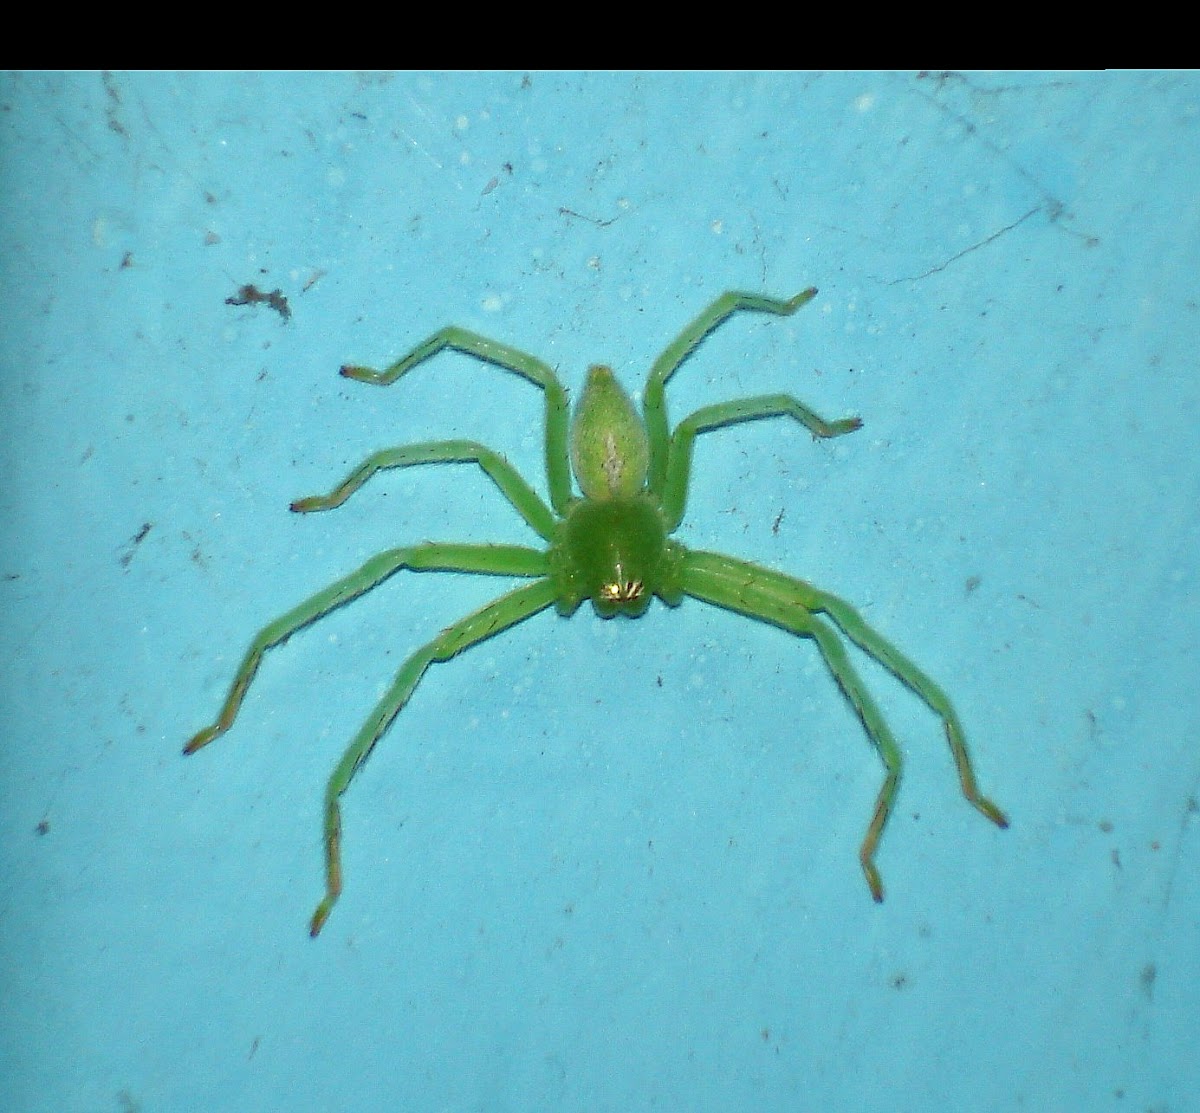 Green huntsman spider